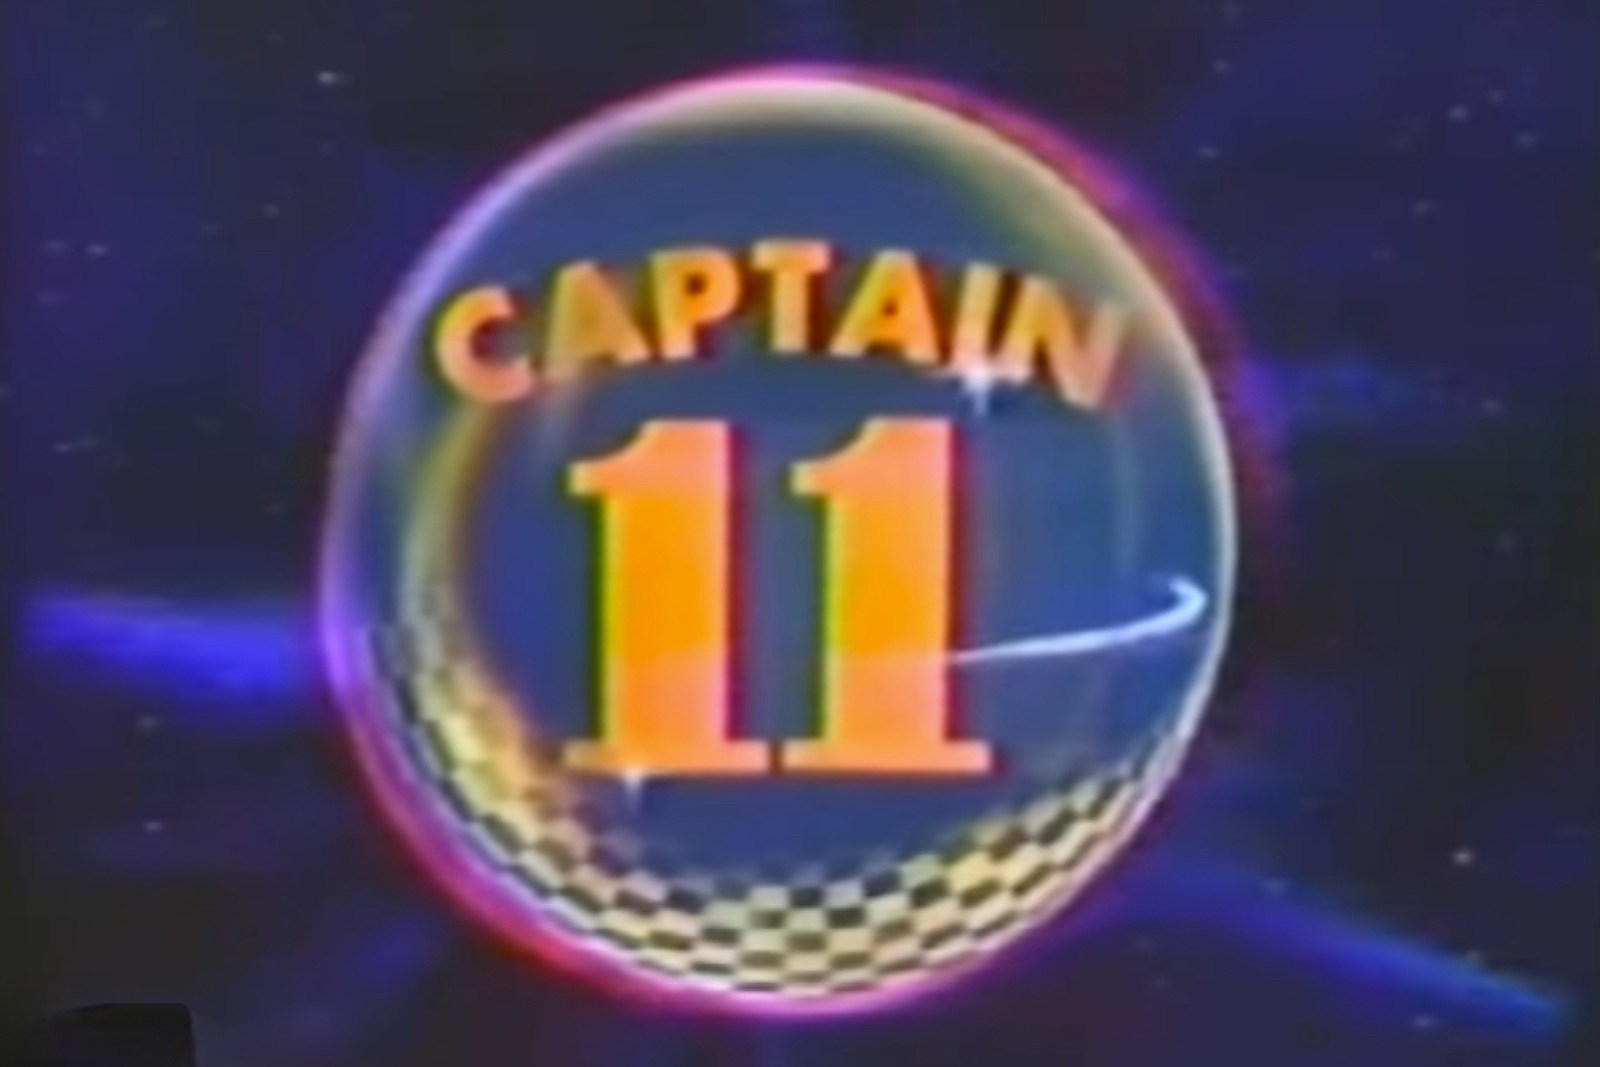 Captain 11 kelo-tv sioux falls